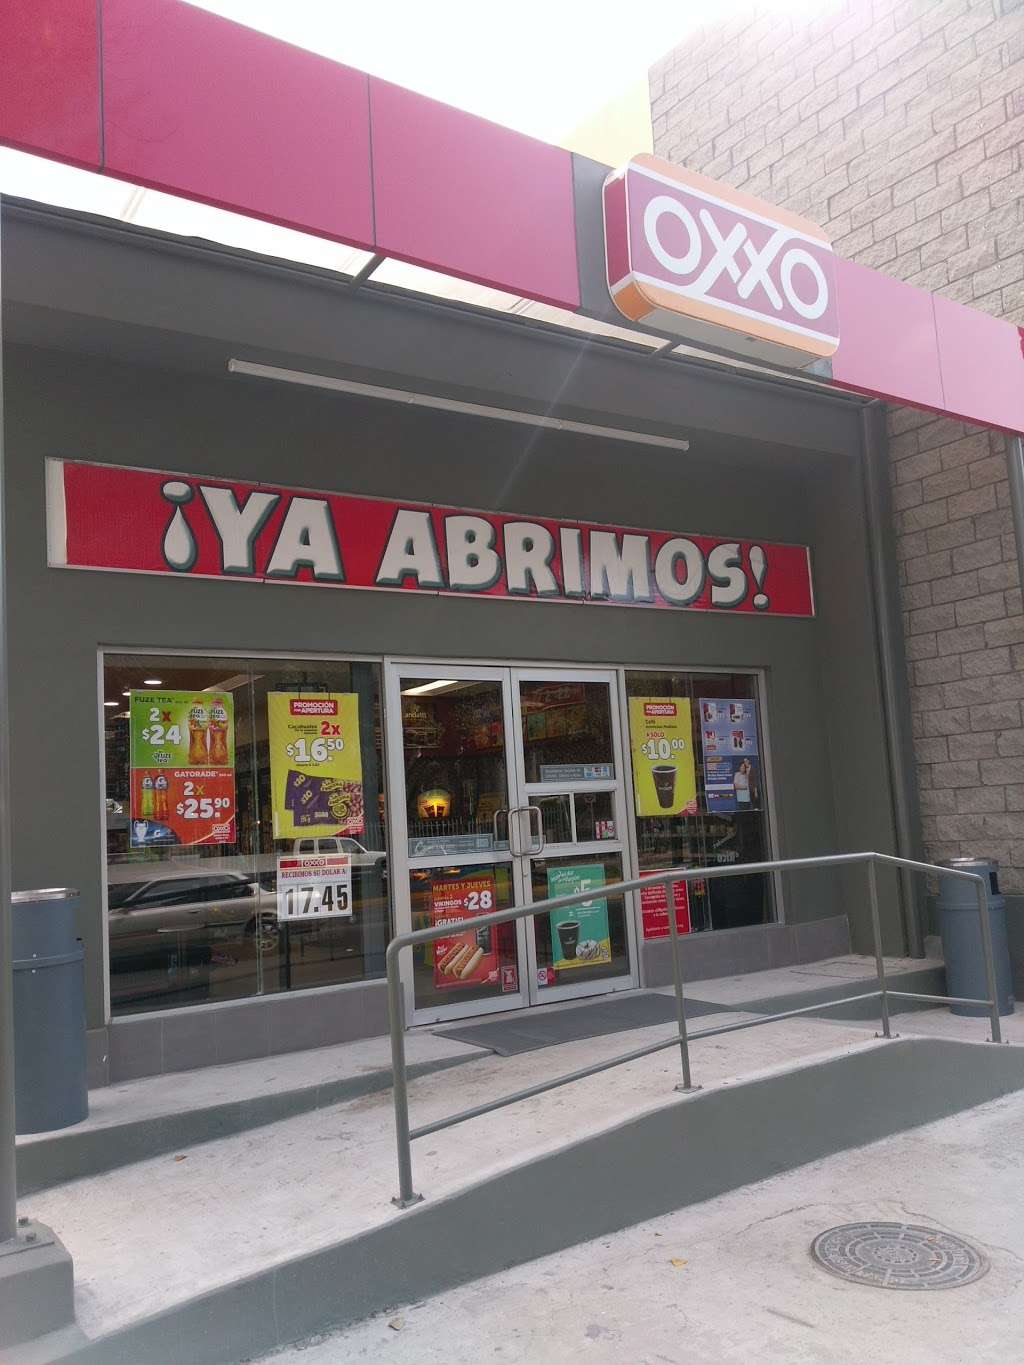 Oxxo Av Blvd Padre Kino 10 Zona Urbana Rio Tijuana 210 Tijuana B C Mexico